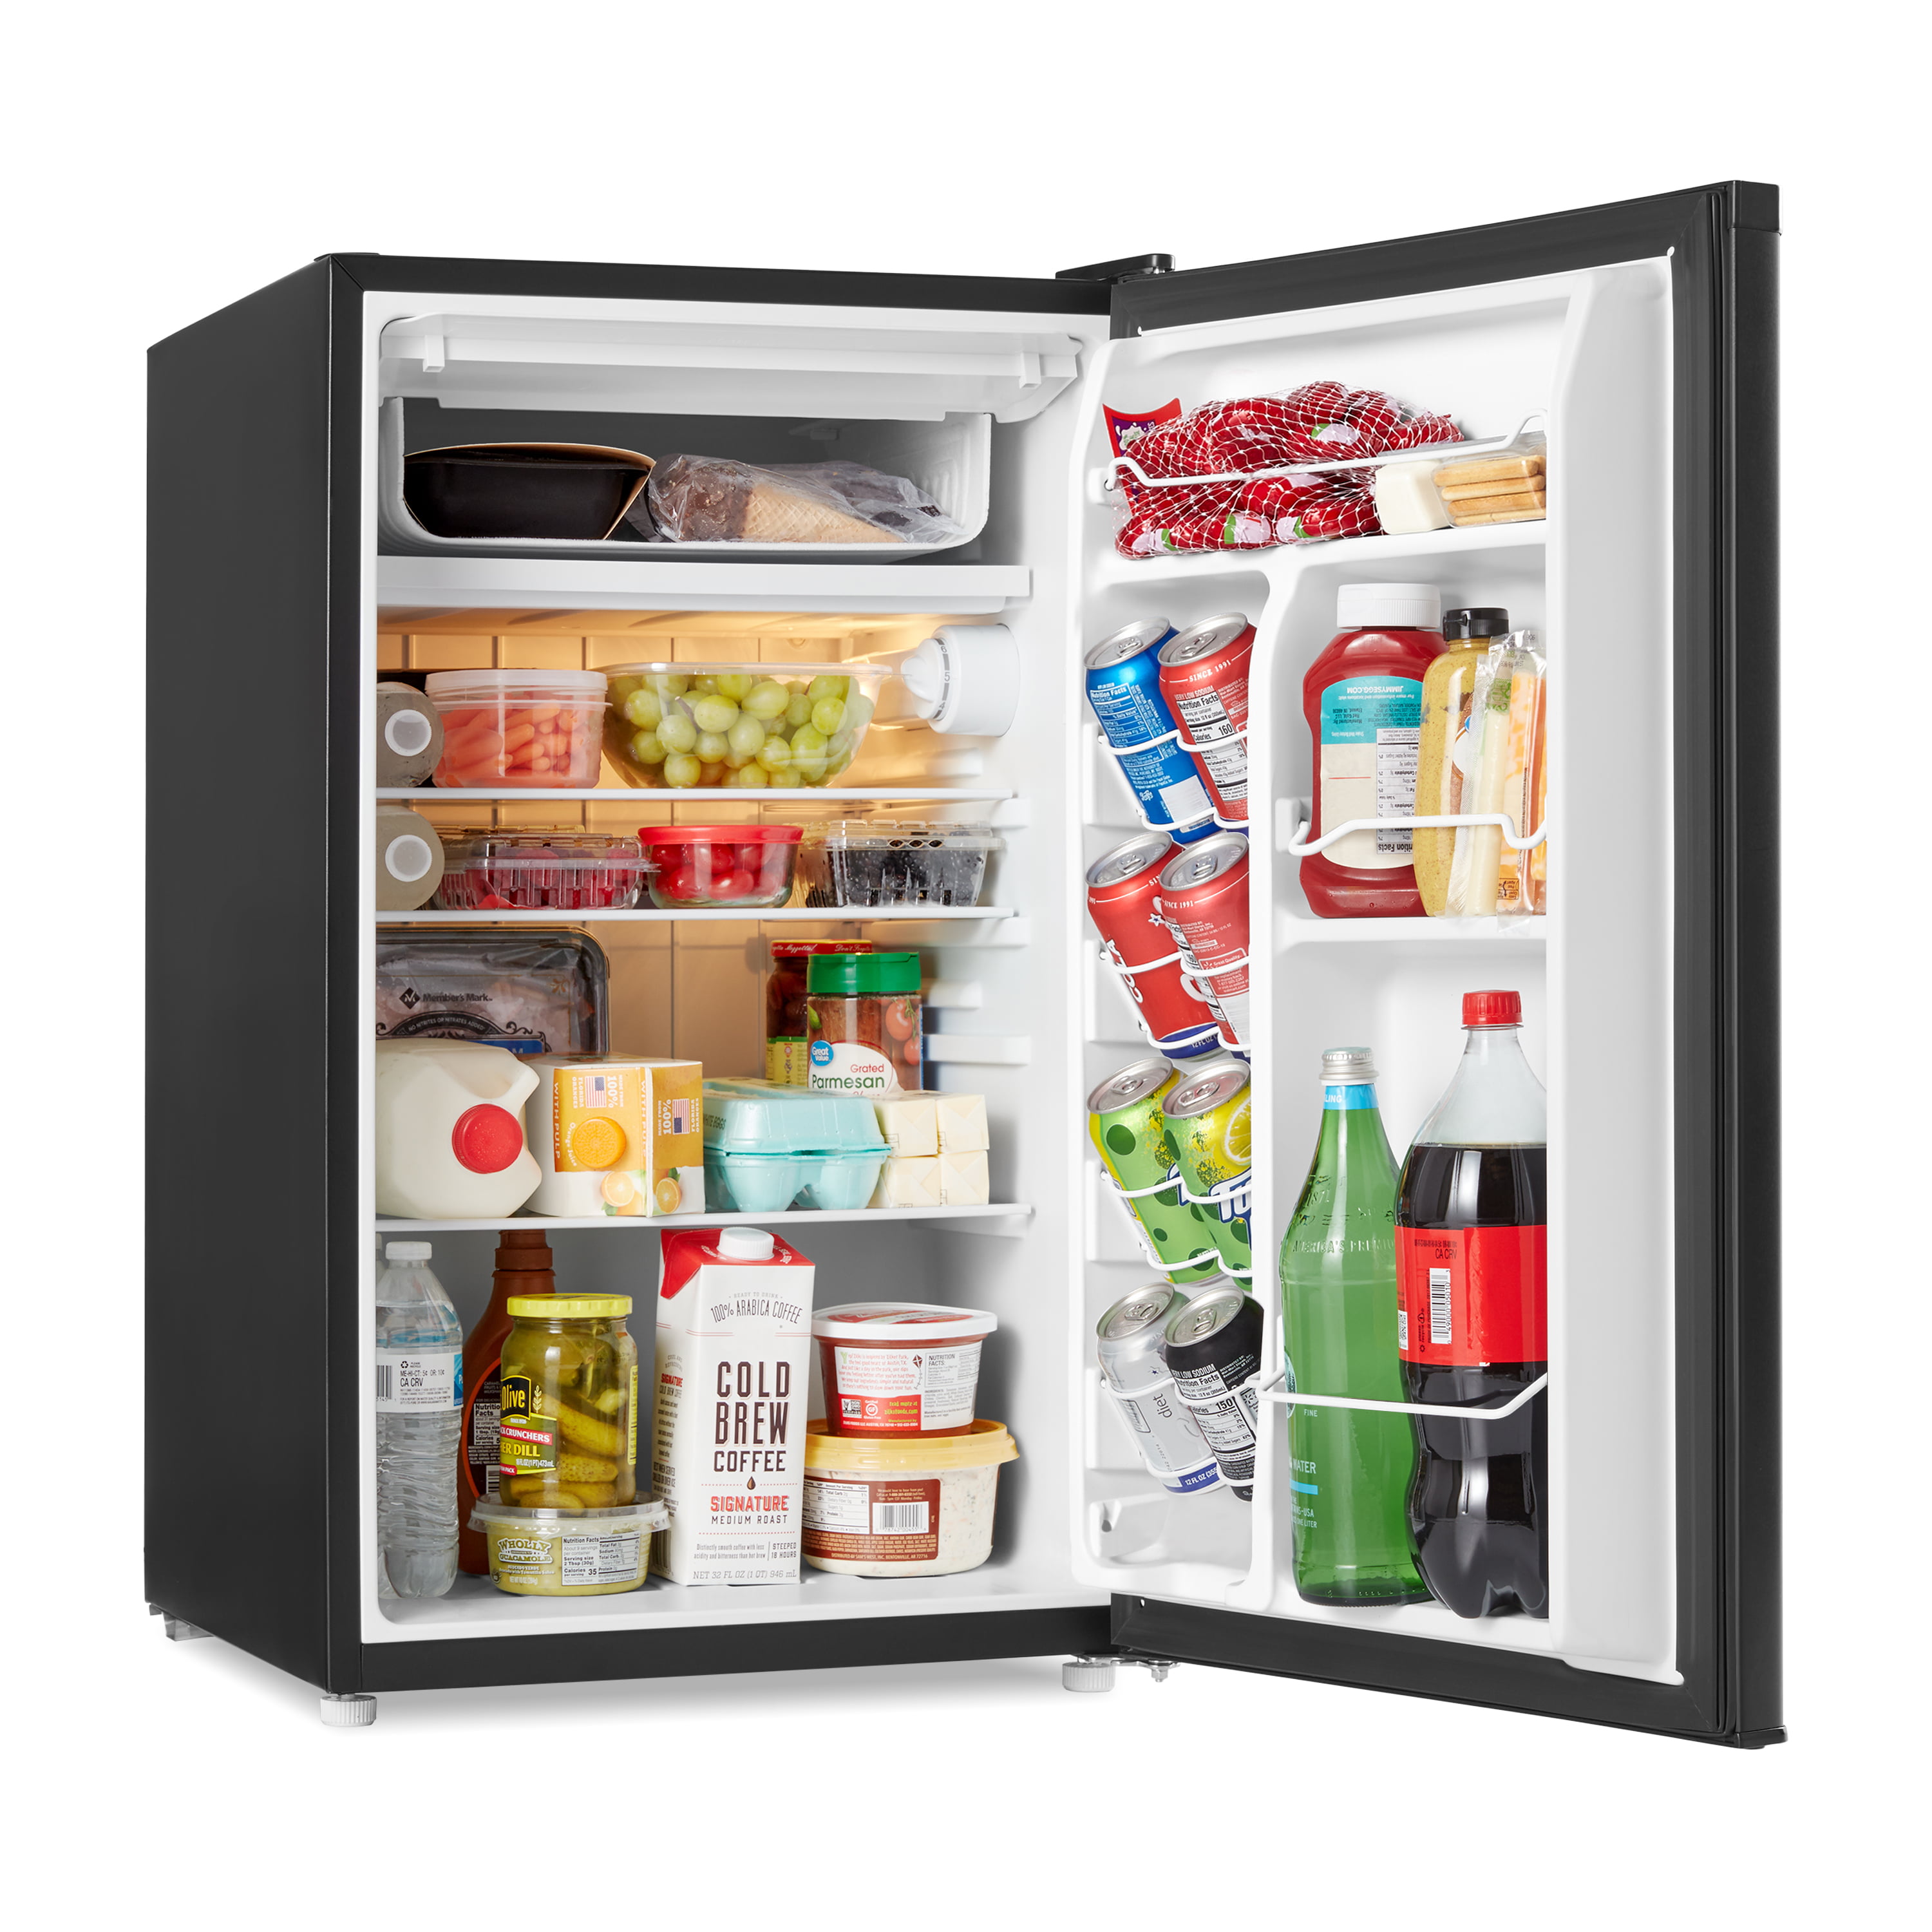 Мини холодильник с камерой. Mini Fridge холодильник. Мини холодильник Mini Fridge. Минихолодильник 5 c21hl. C4f740cdbgu1 холодильник.